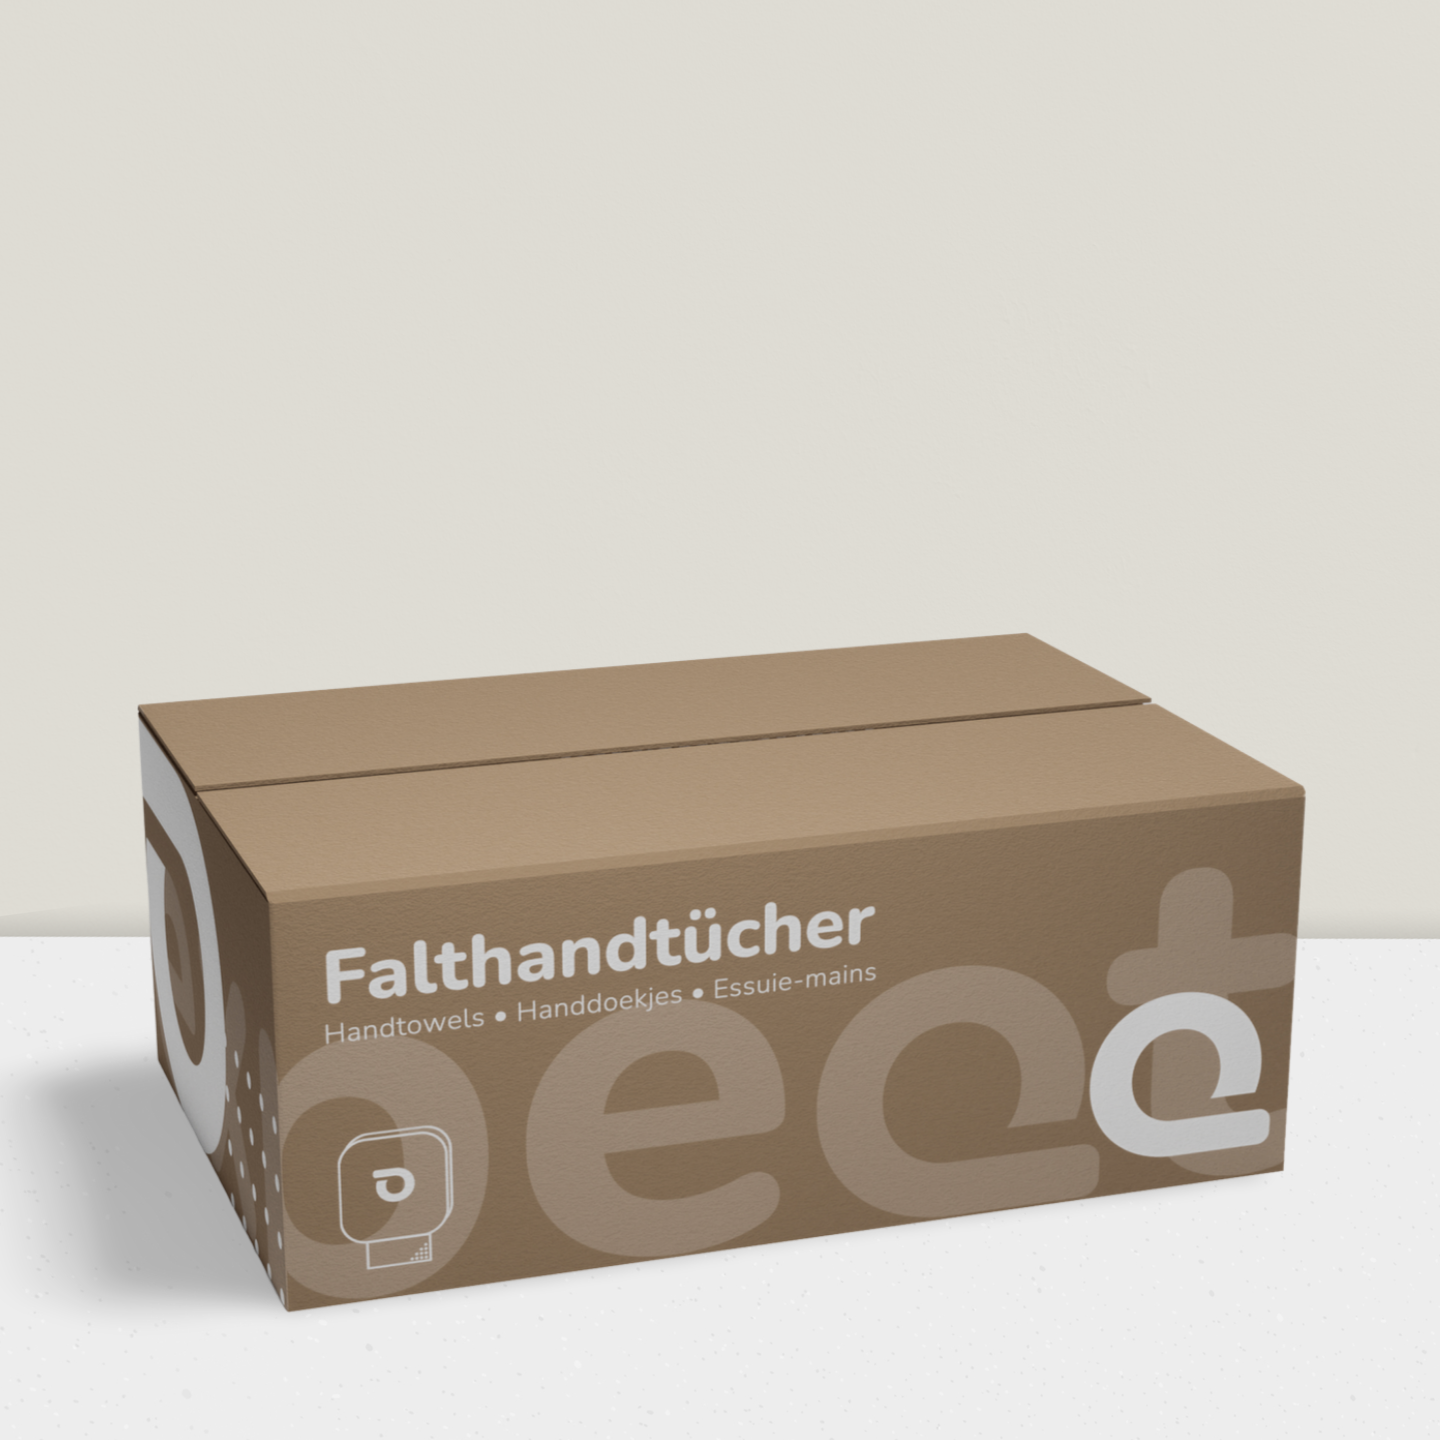 Papier- und Falthandtuch, V-Falz, 23 x 21cm, 2-lagig, Recycling